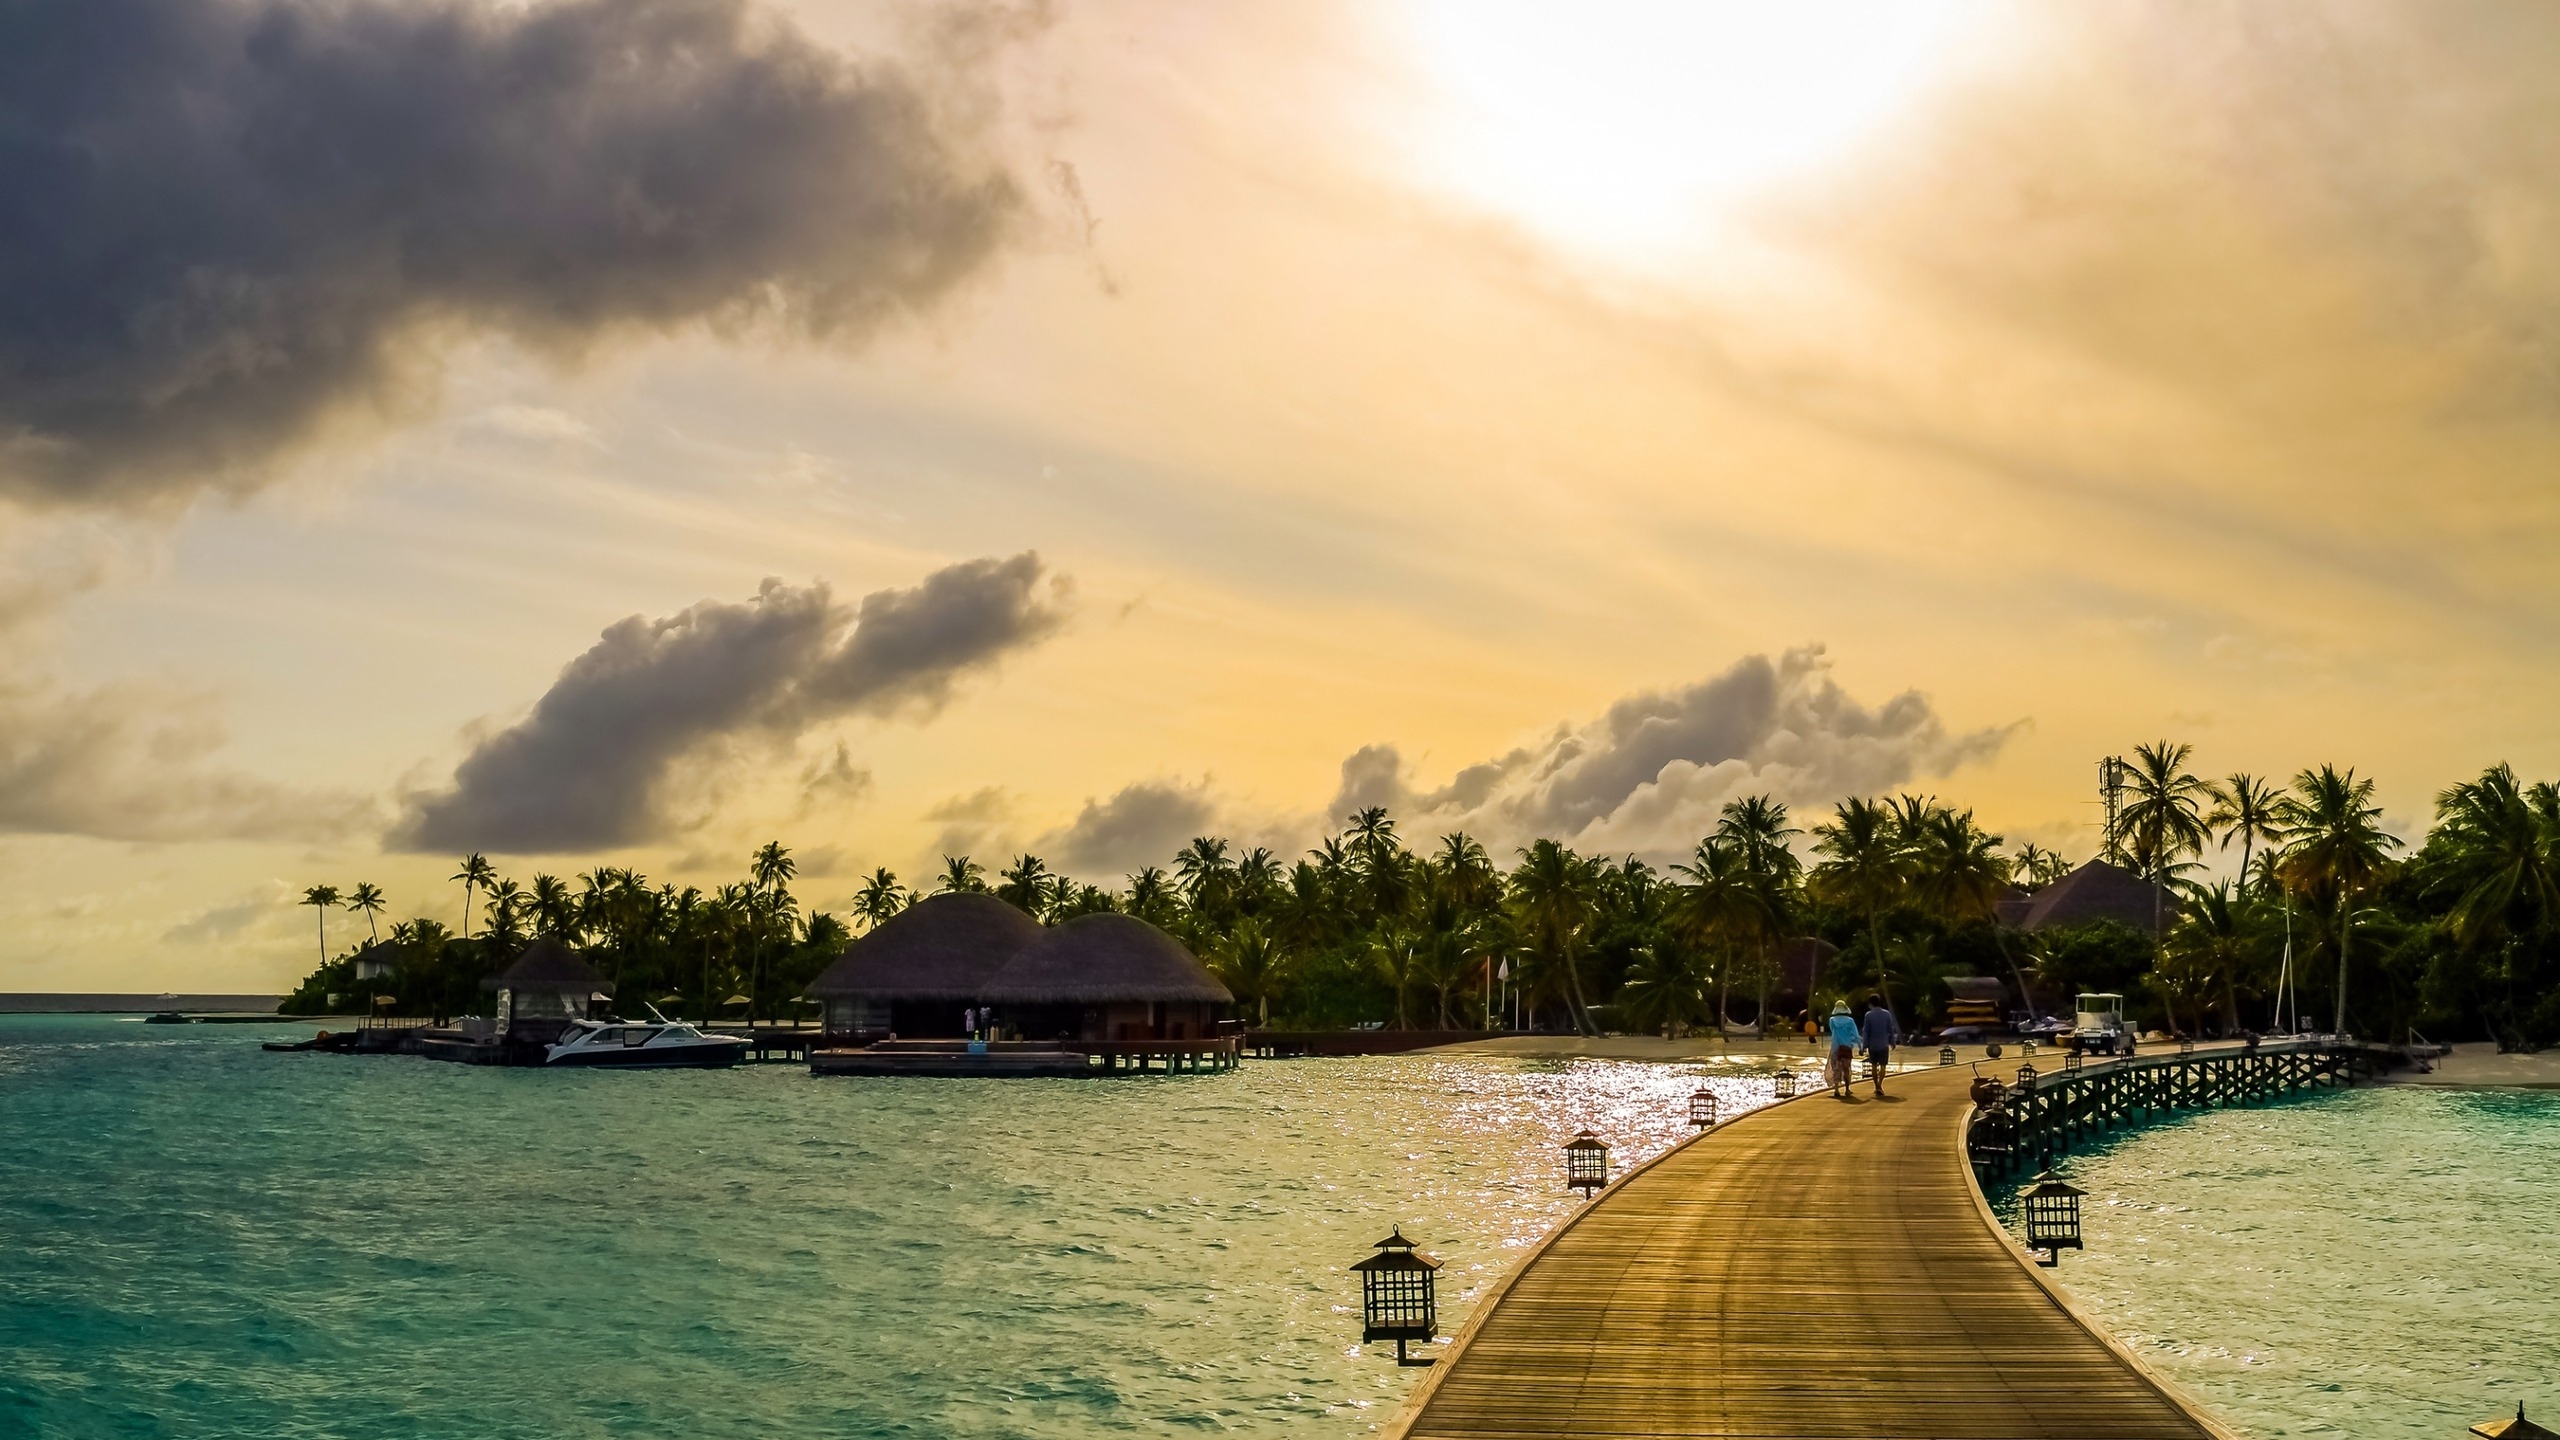 Exotic Maldives Beach for 2560x1440 HDTV resolution